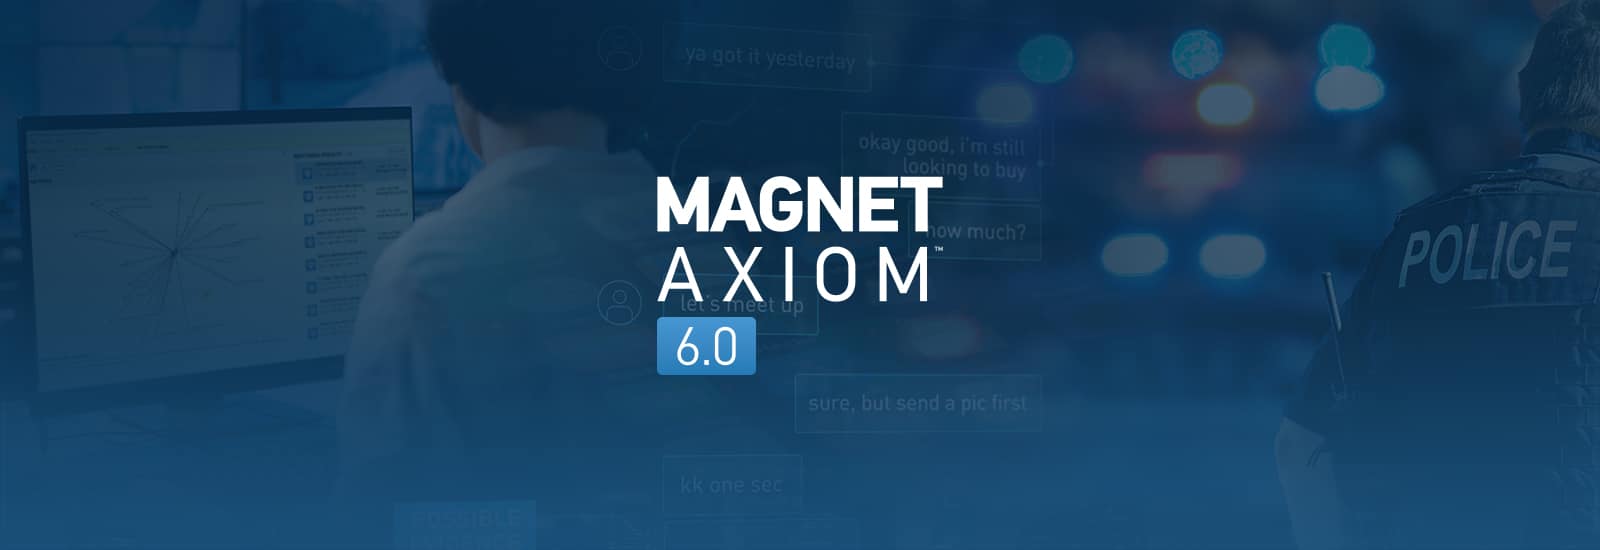 Magnet AXIOM 6.0